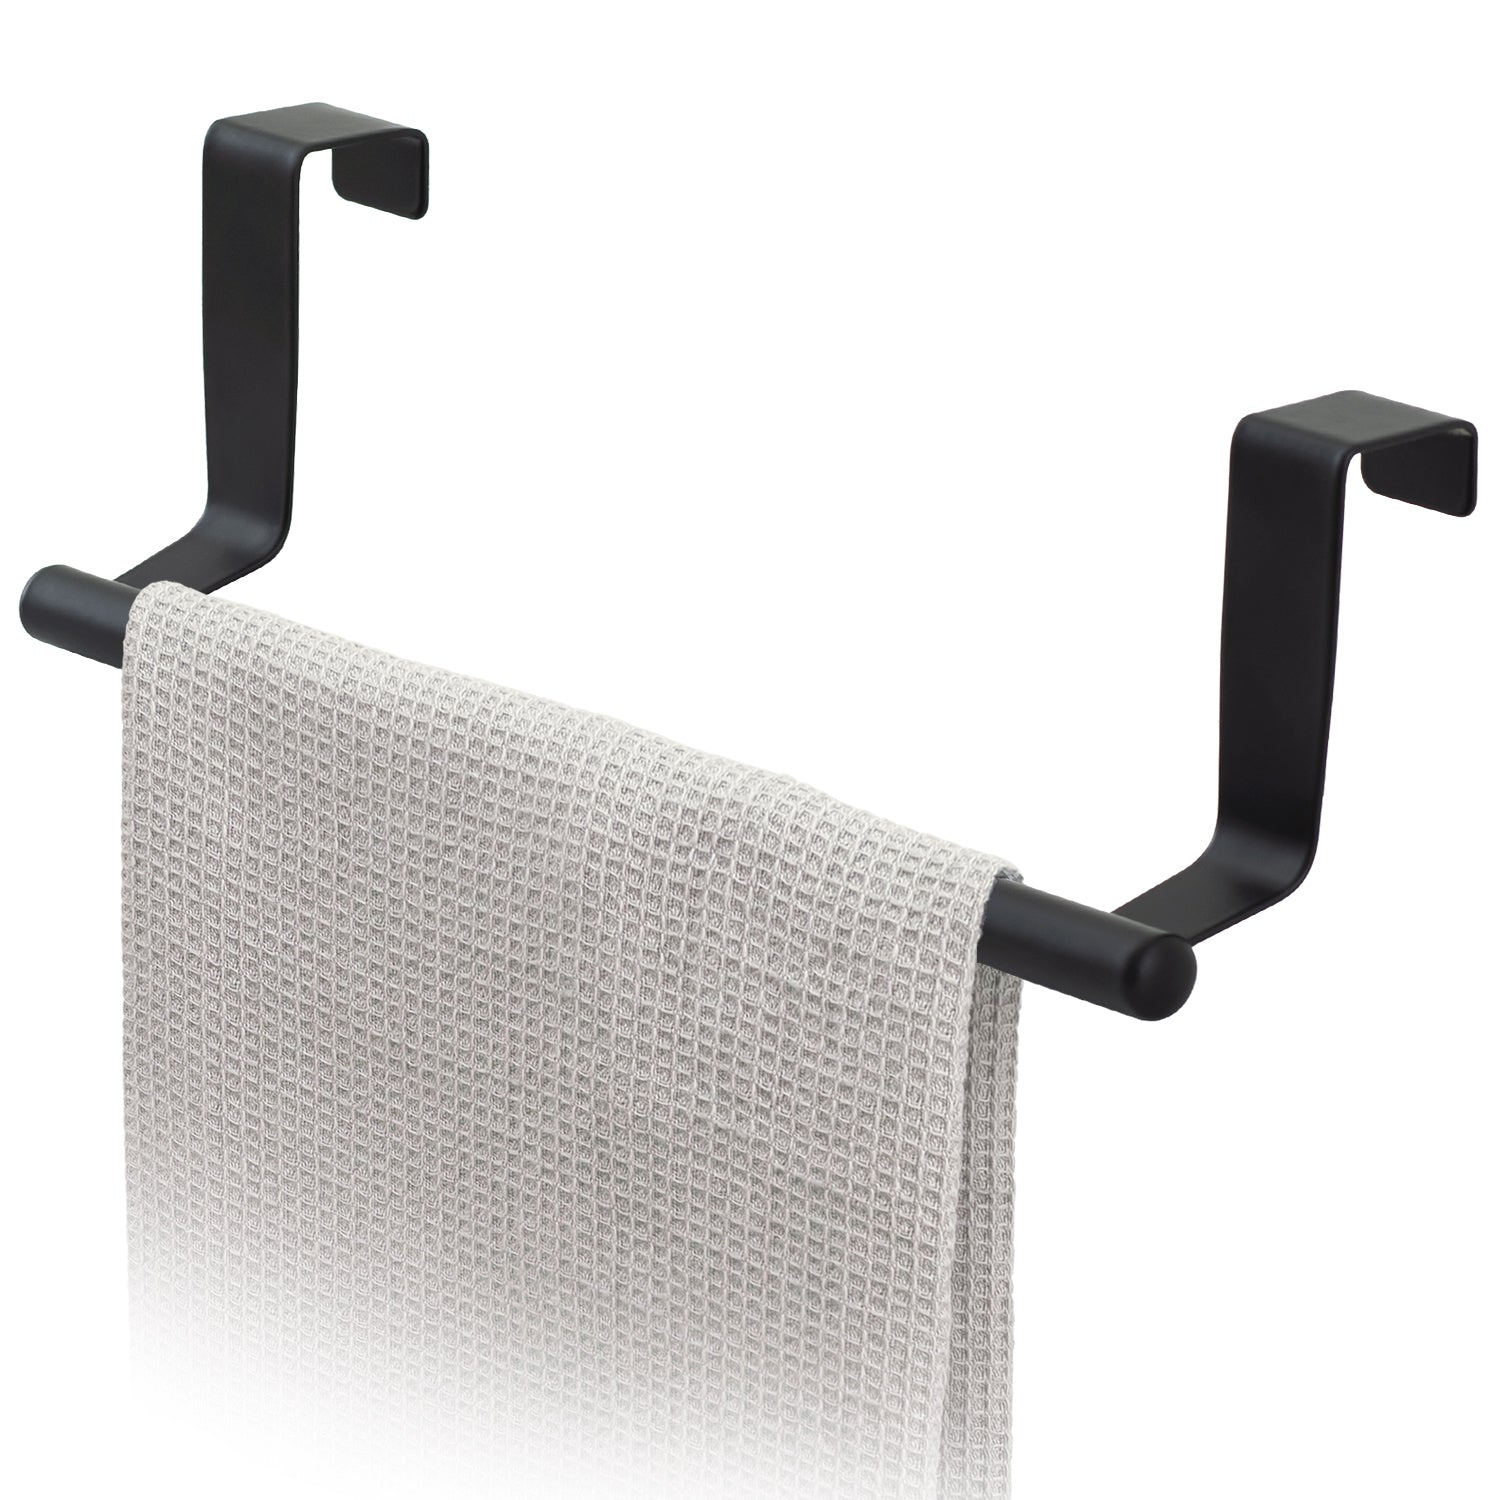 Tatkraft Horizon Black - Over the Door Towel Rail, Towel Holder for Cupboard Drawer Cabinet, Kitchen and Bathroom, Anti Slip Scratch Protecting Stripe